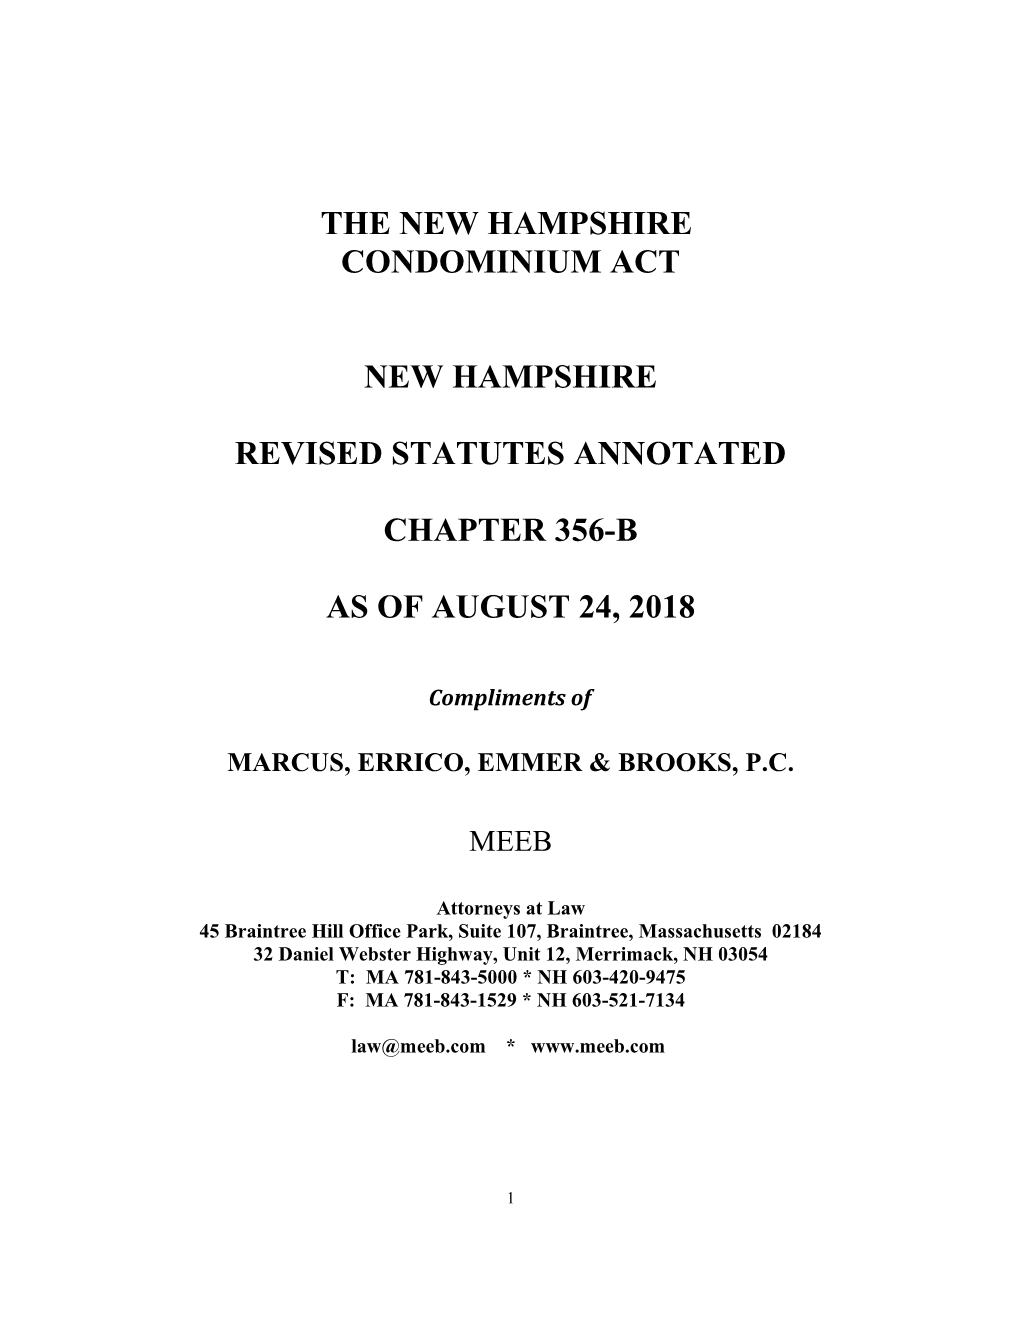 The New Hampshire